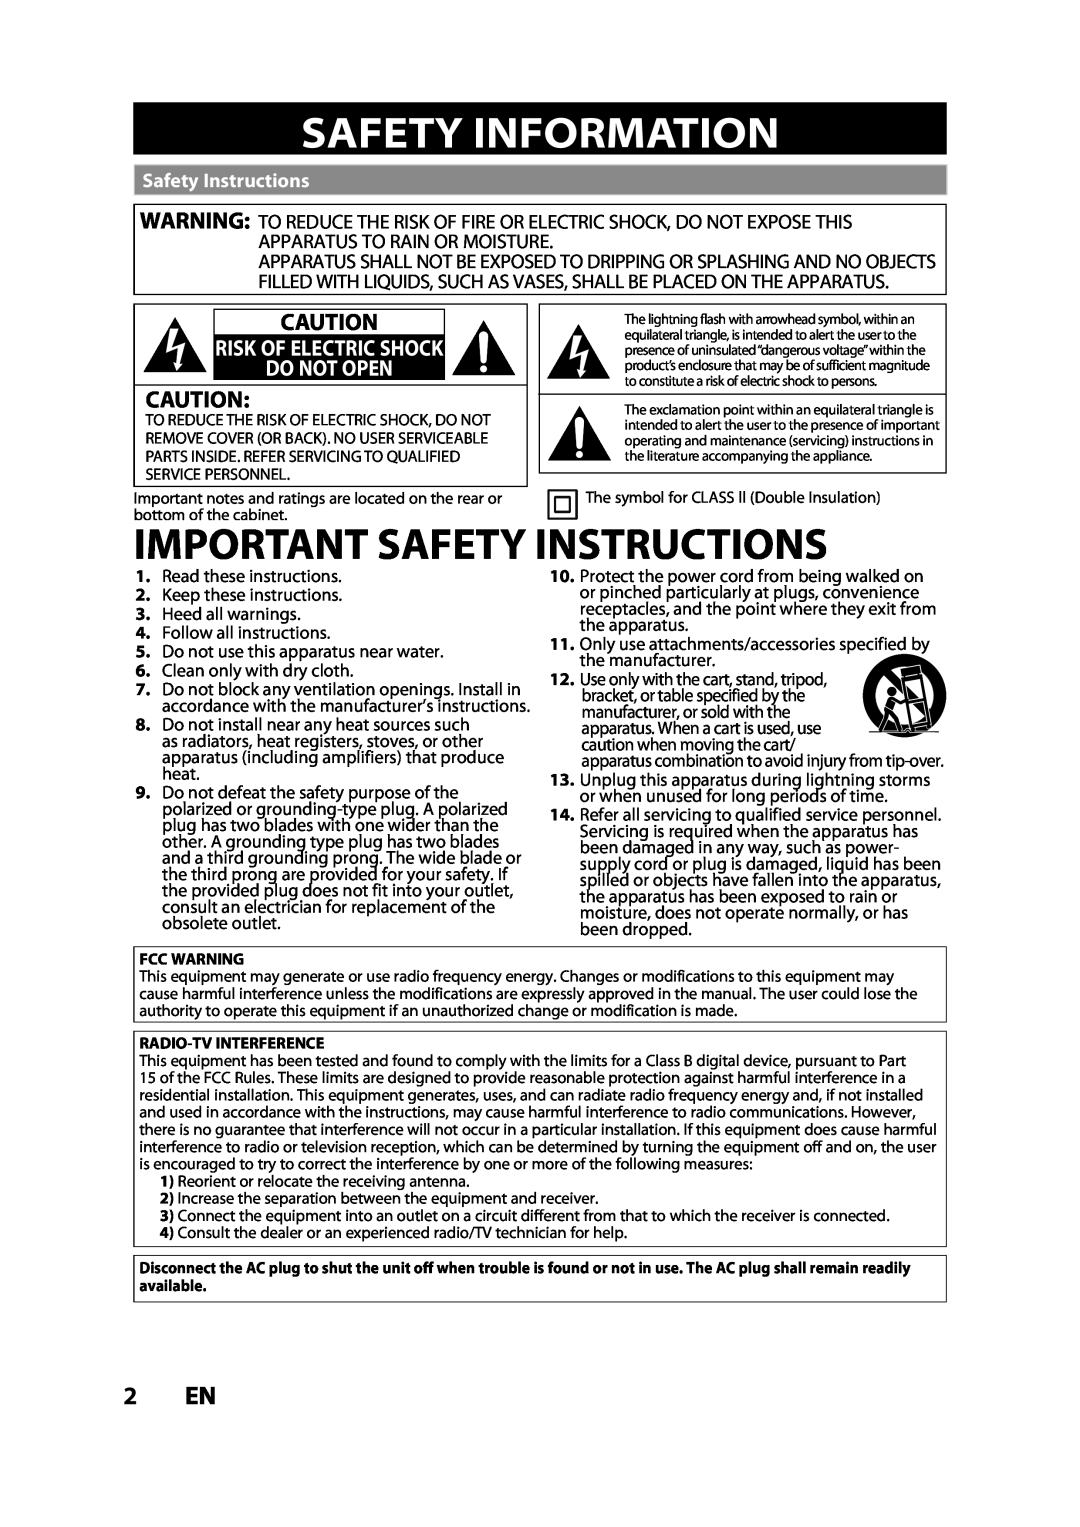 Magnavox MDR533H Safety Information, 2 EN, Important Safety Instructions, Risk Of Electric Shock Do Not Open 